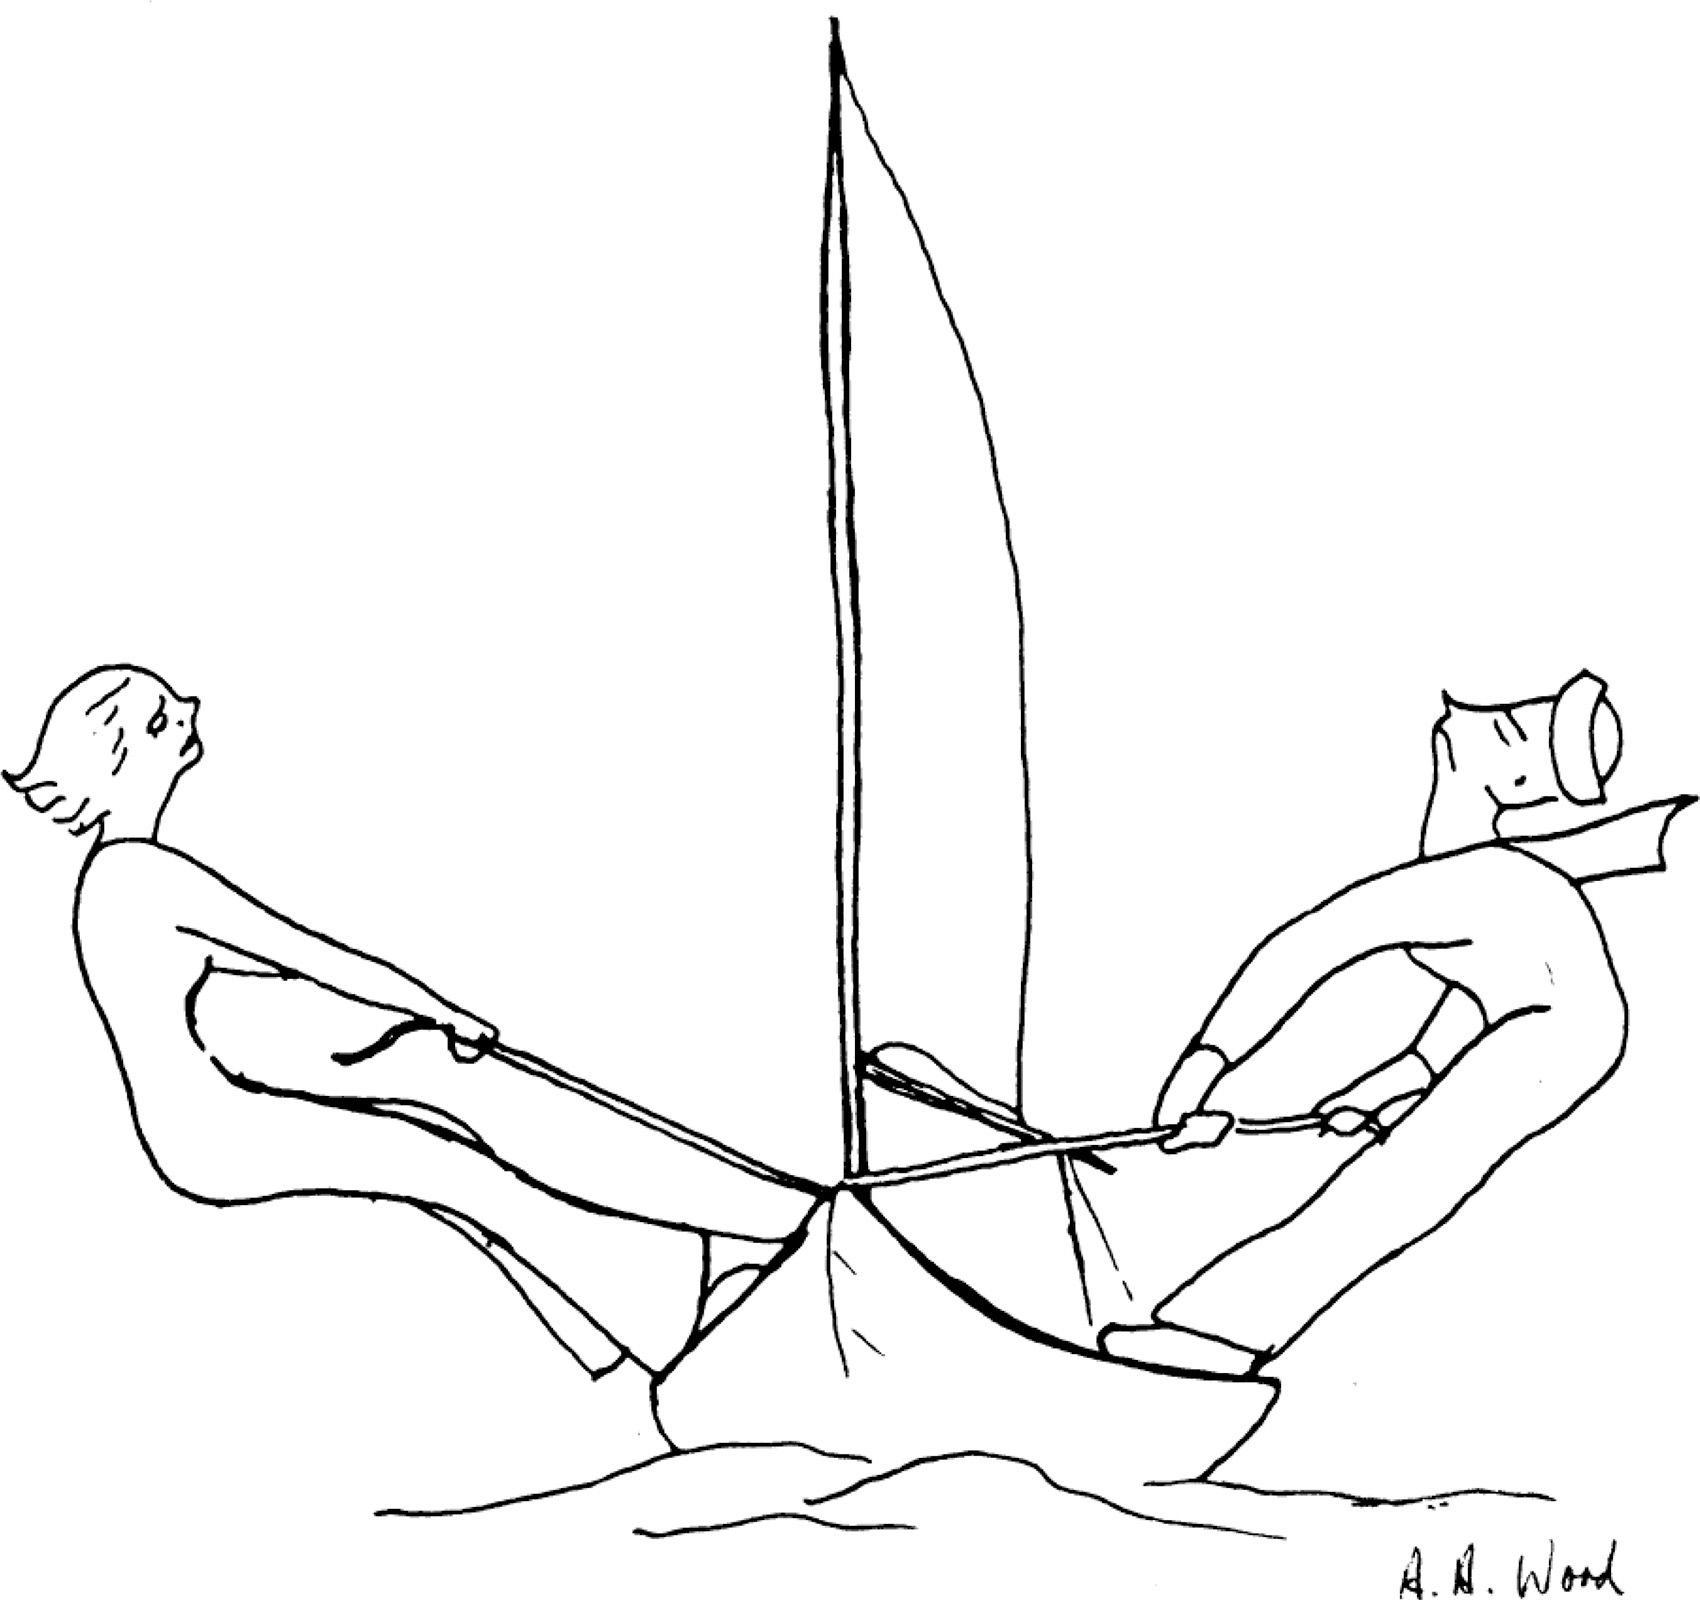 Two sailors frantically steadying a steady boat (Watzlawick et al., 2011)